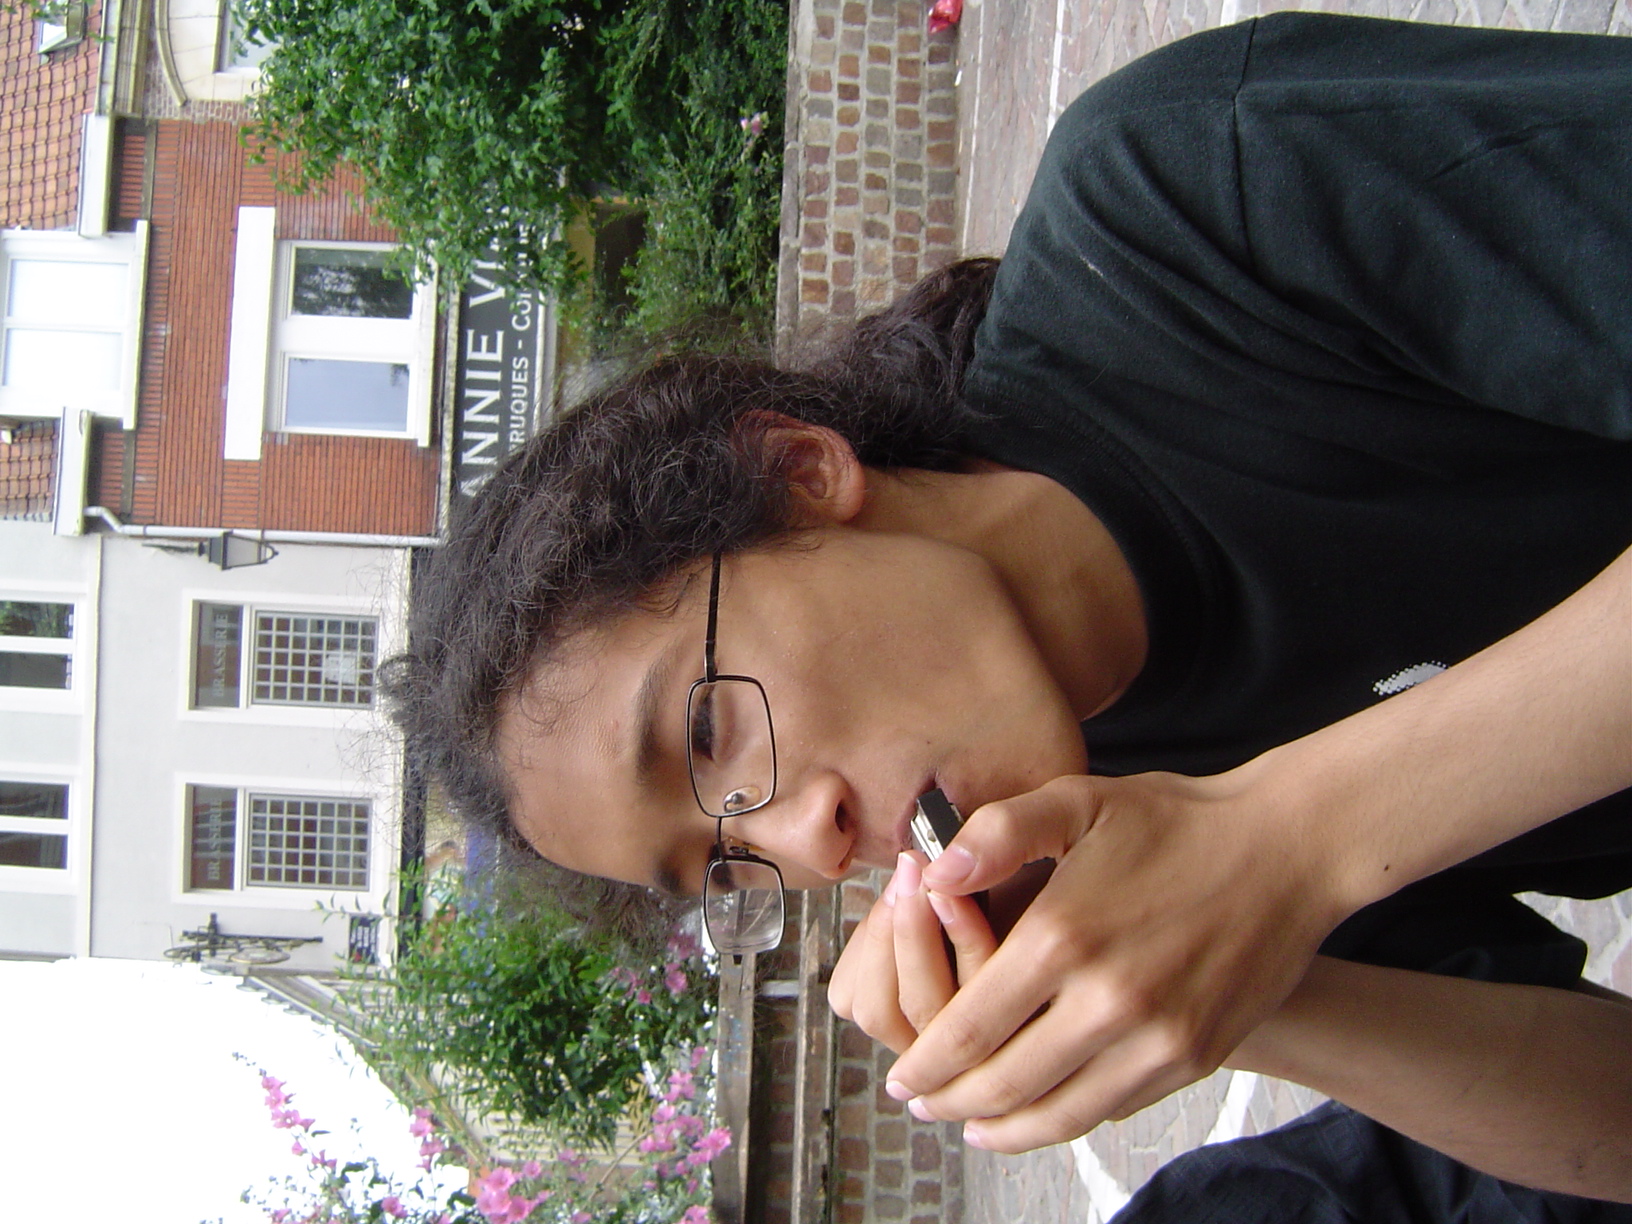 Photo 23 - Tao s'essaye à l'harmonica